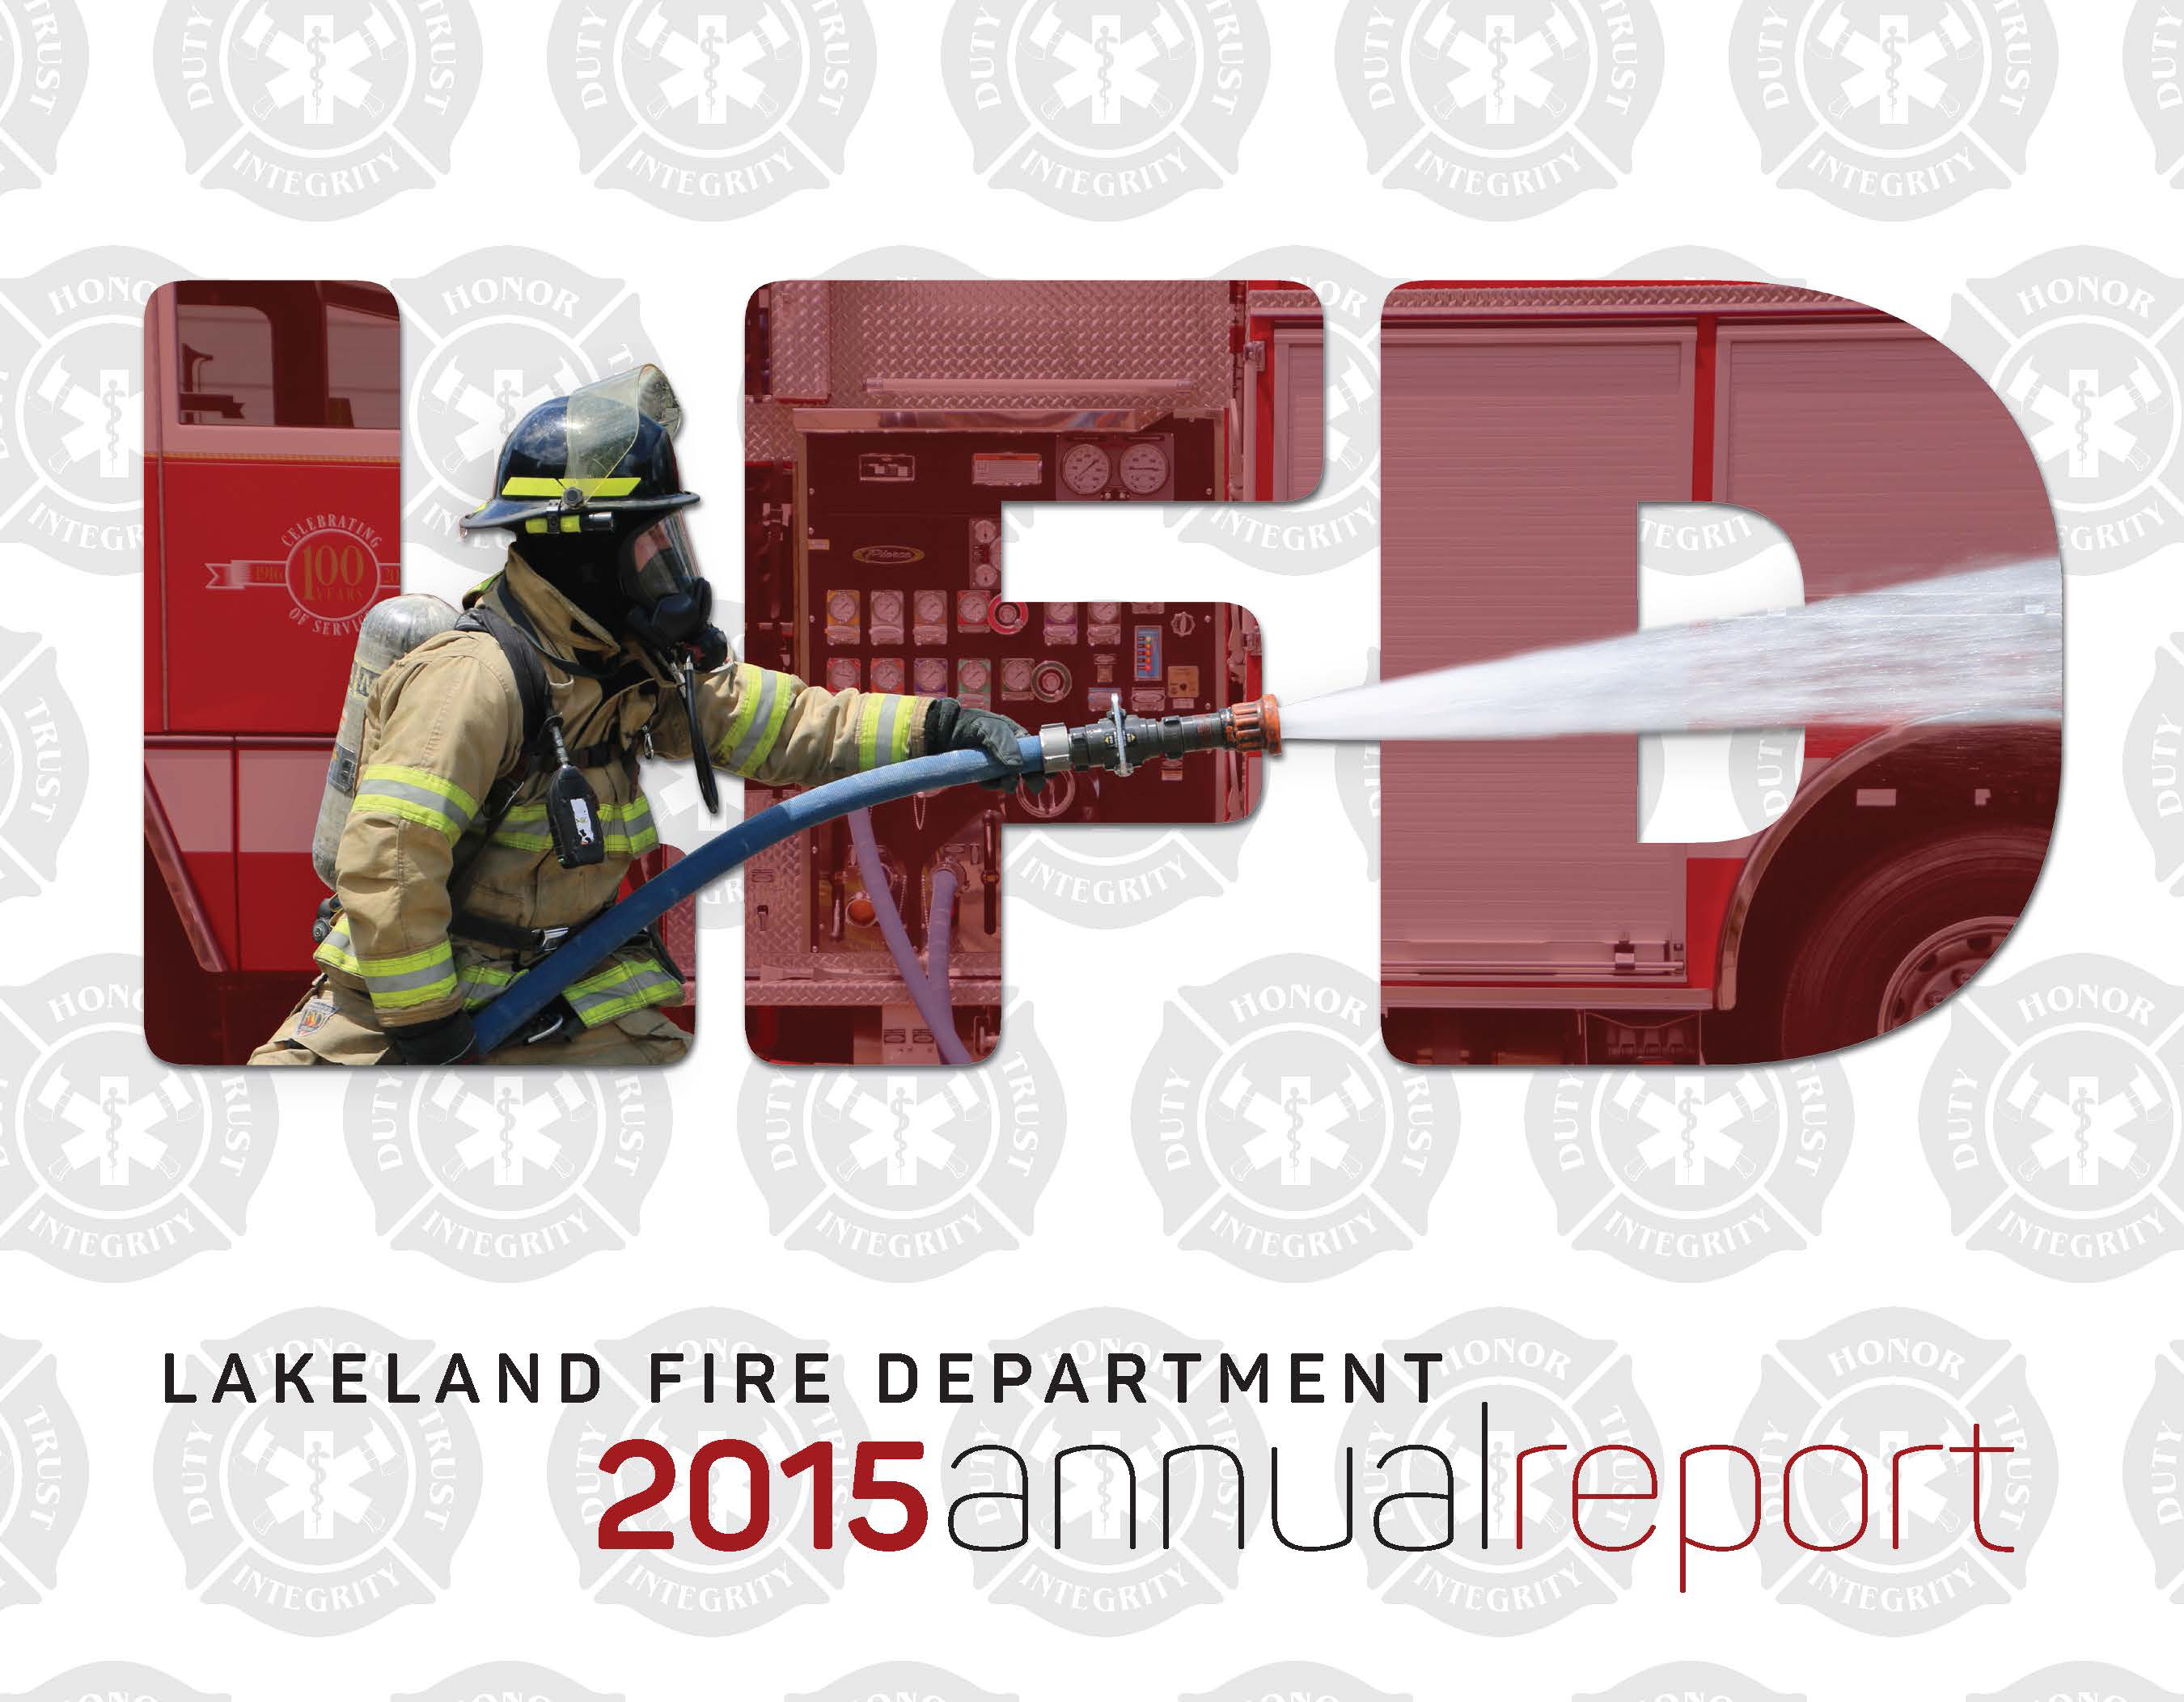 Lakeland Fire Department Annual Report 2015 